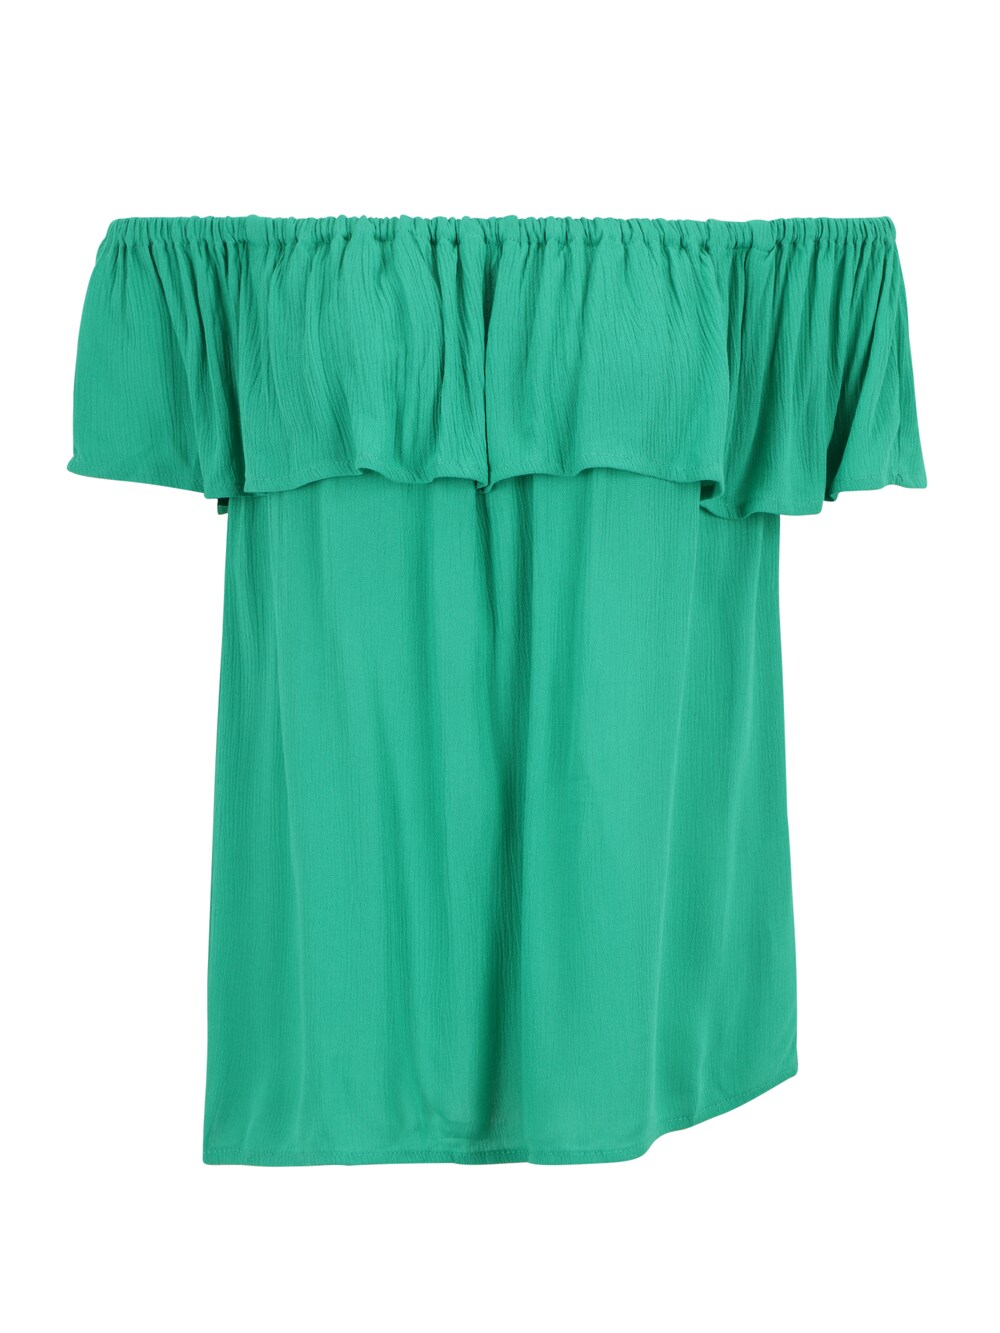 Блузка ICHI MARRAKECH, зеленый